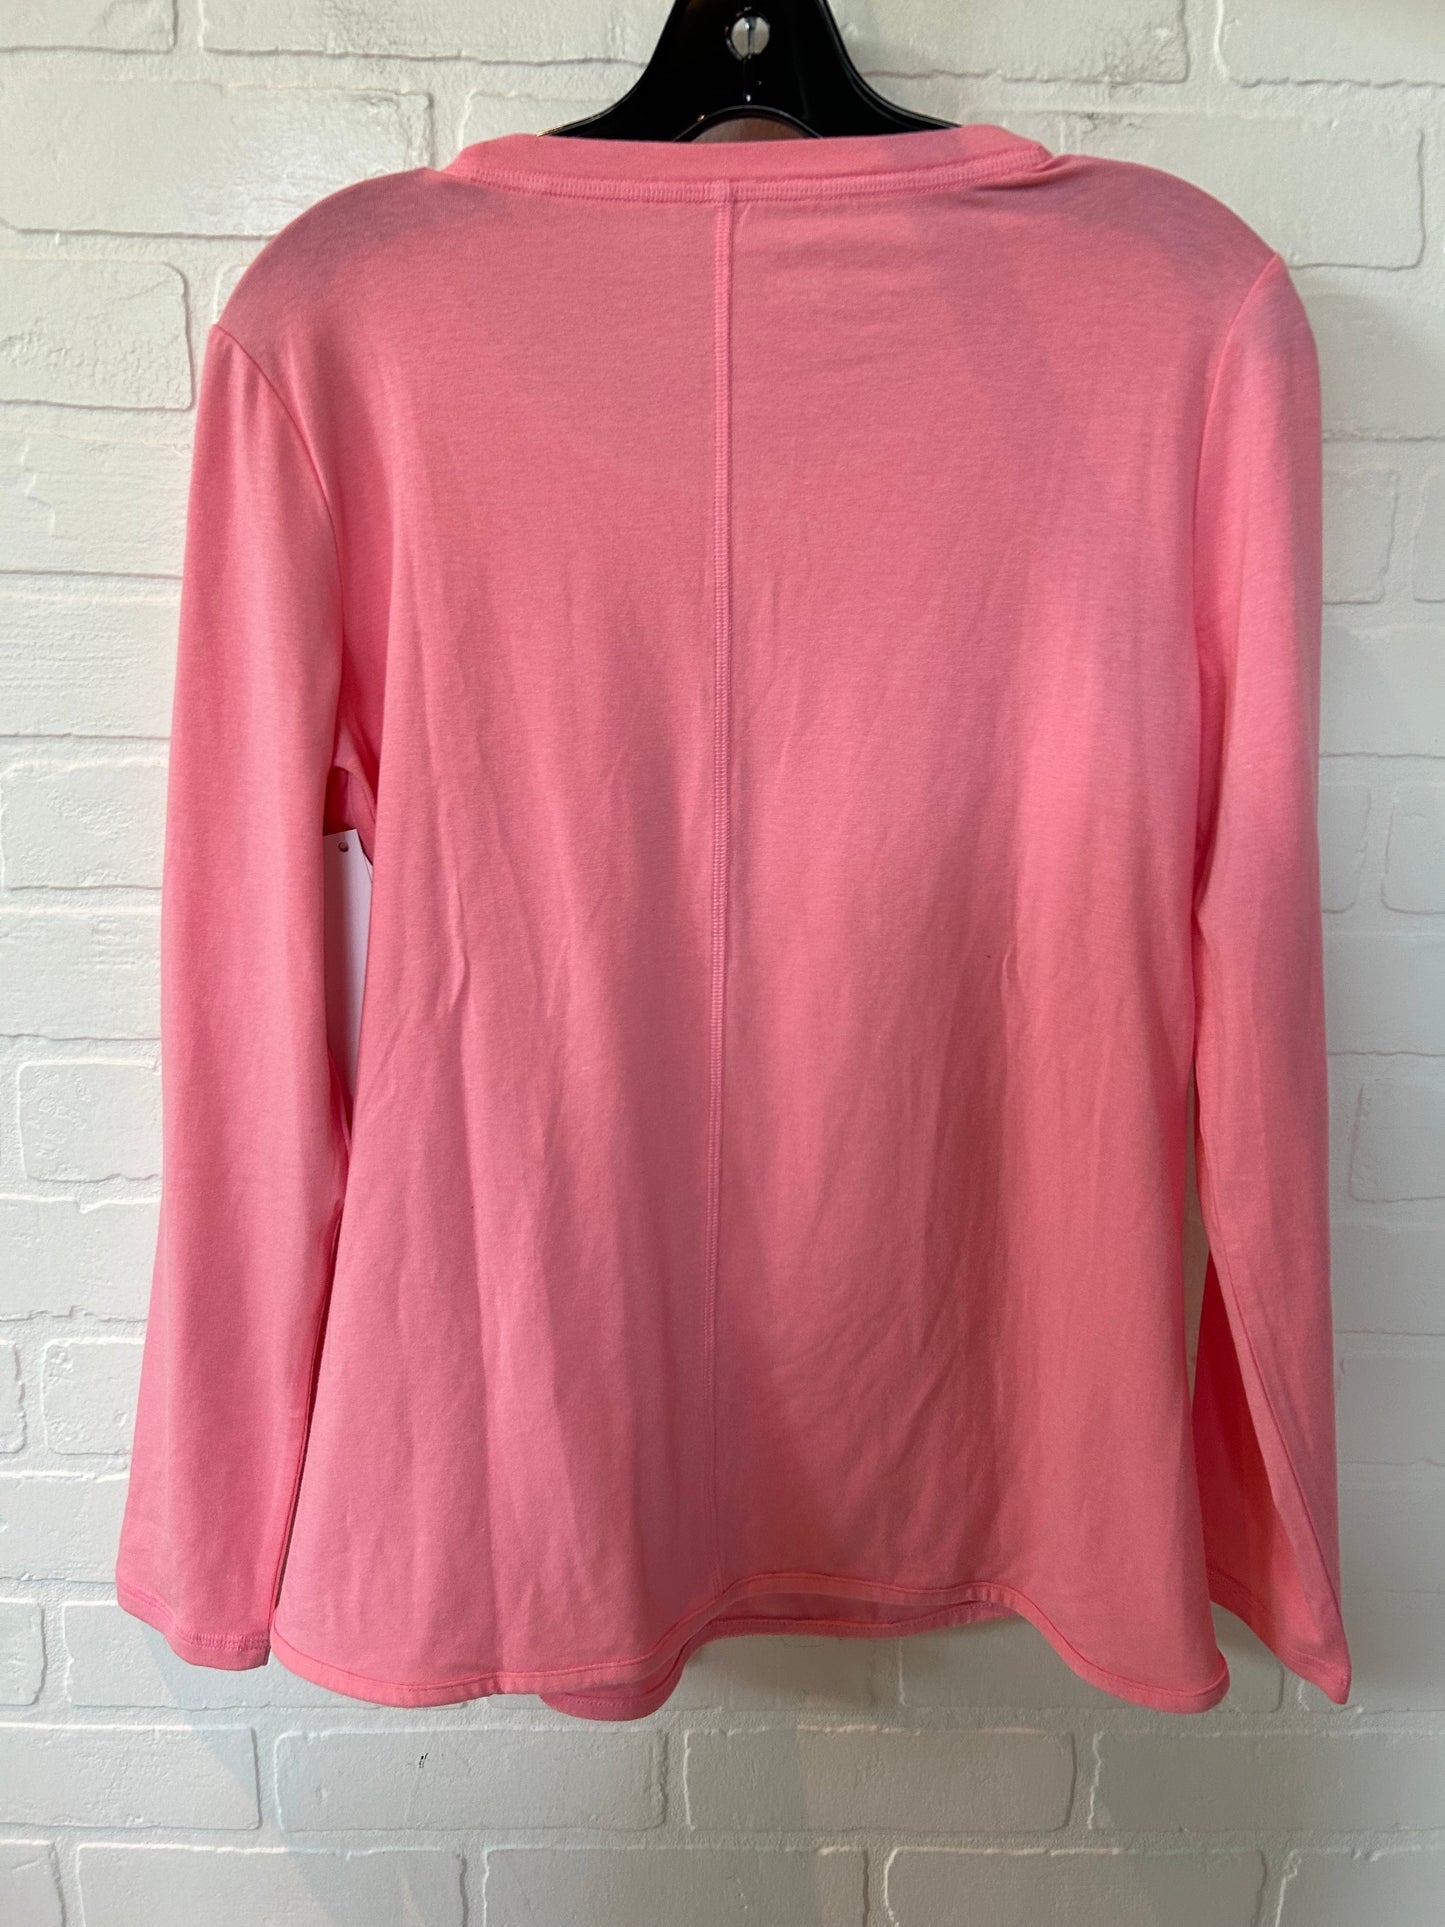 Pink Top Long Sleeve Basic Talbots, Size M